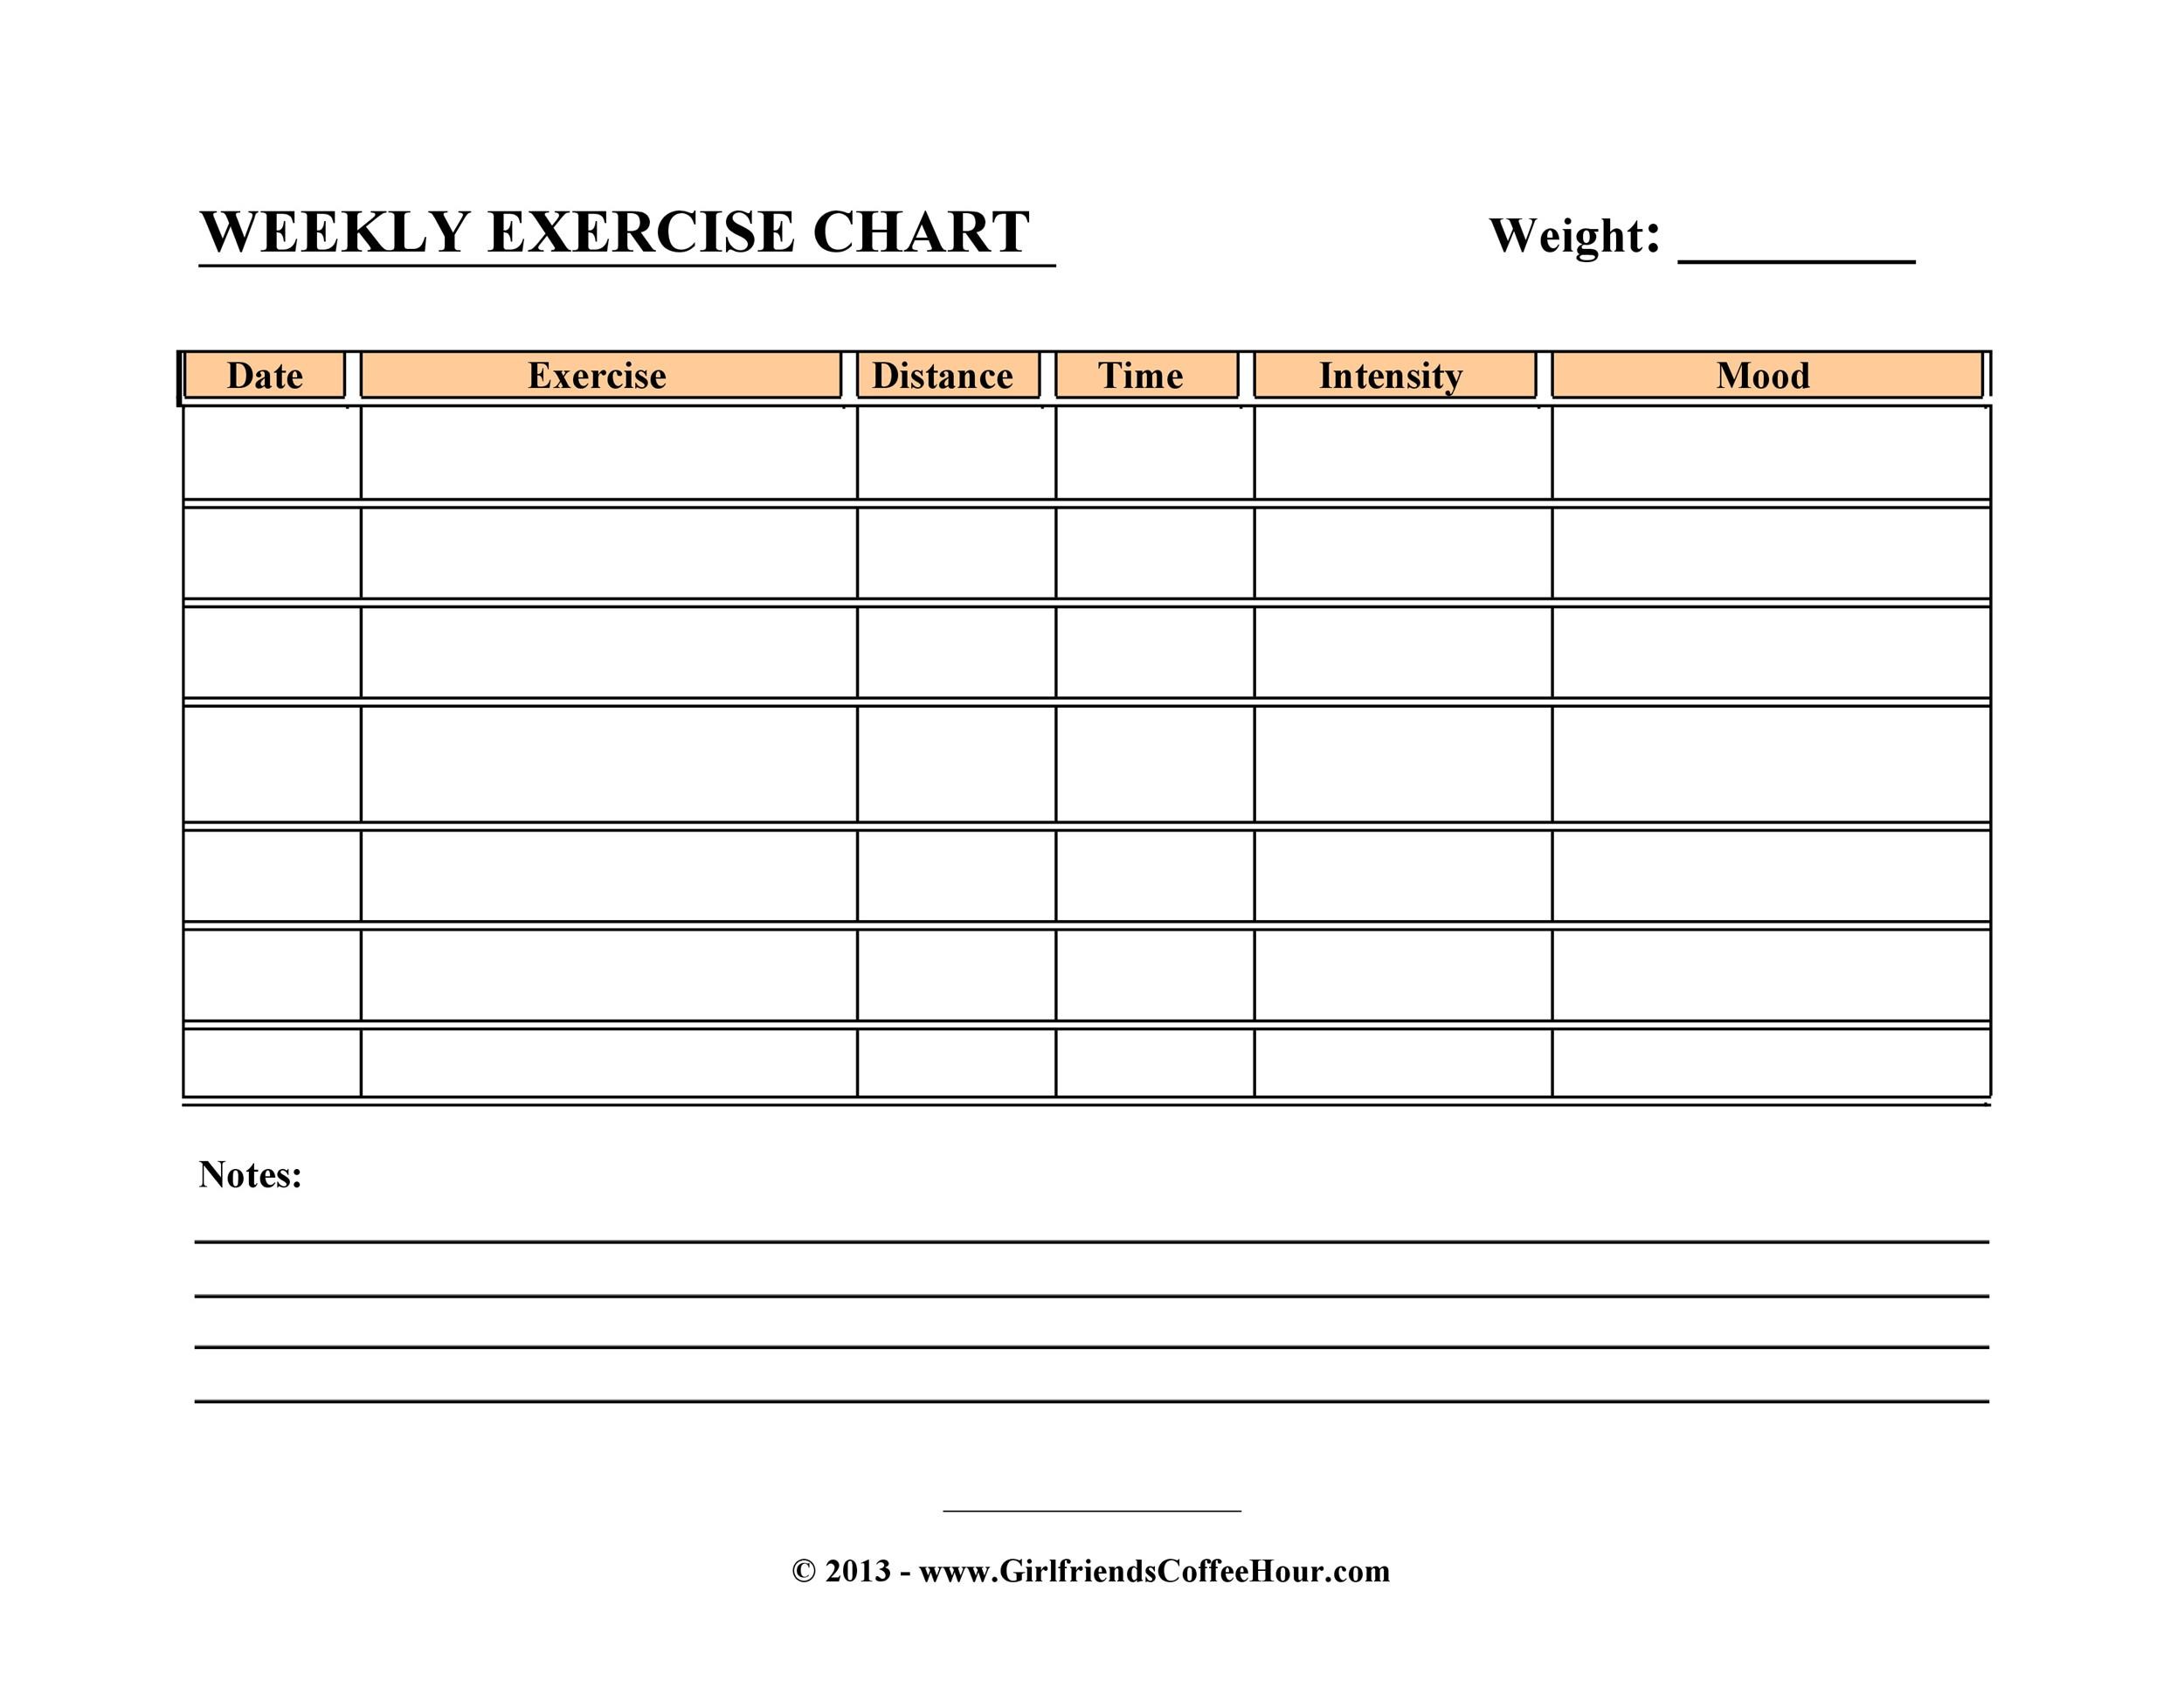 Tenderfoot Exercise Chart